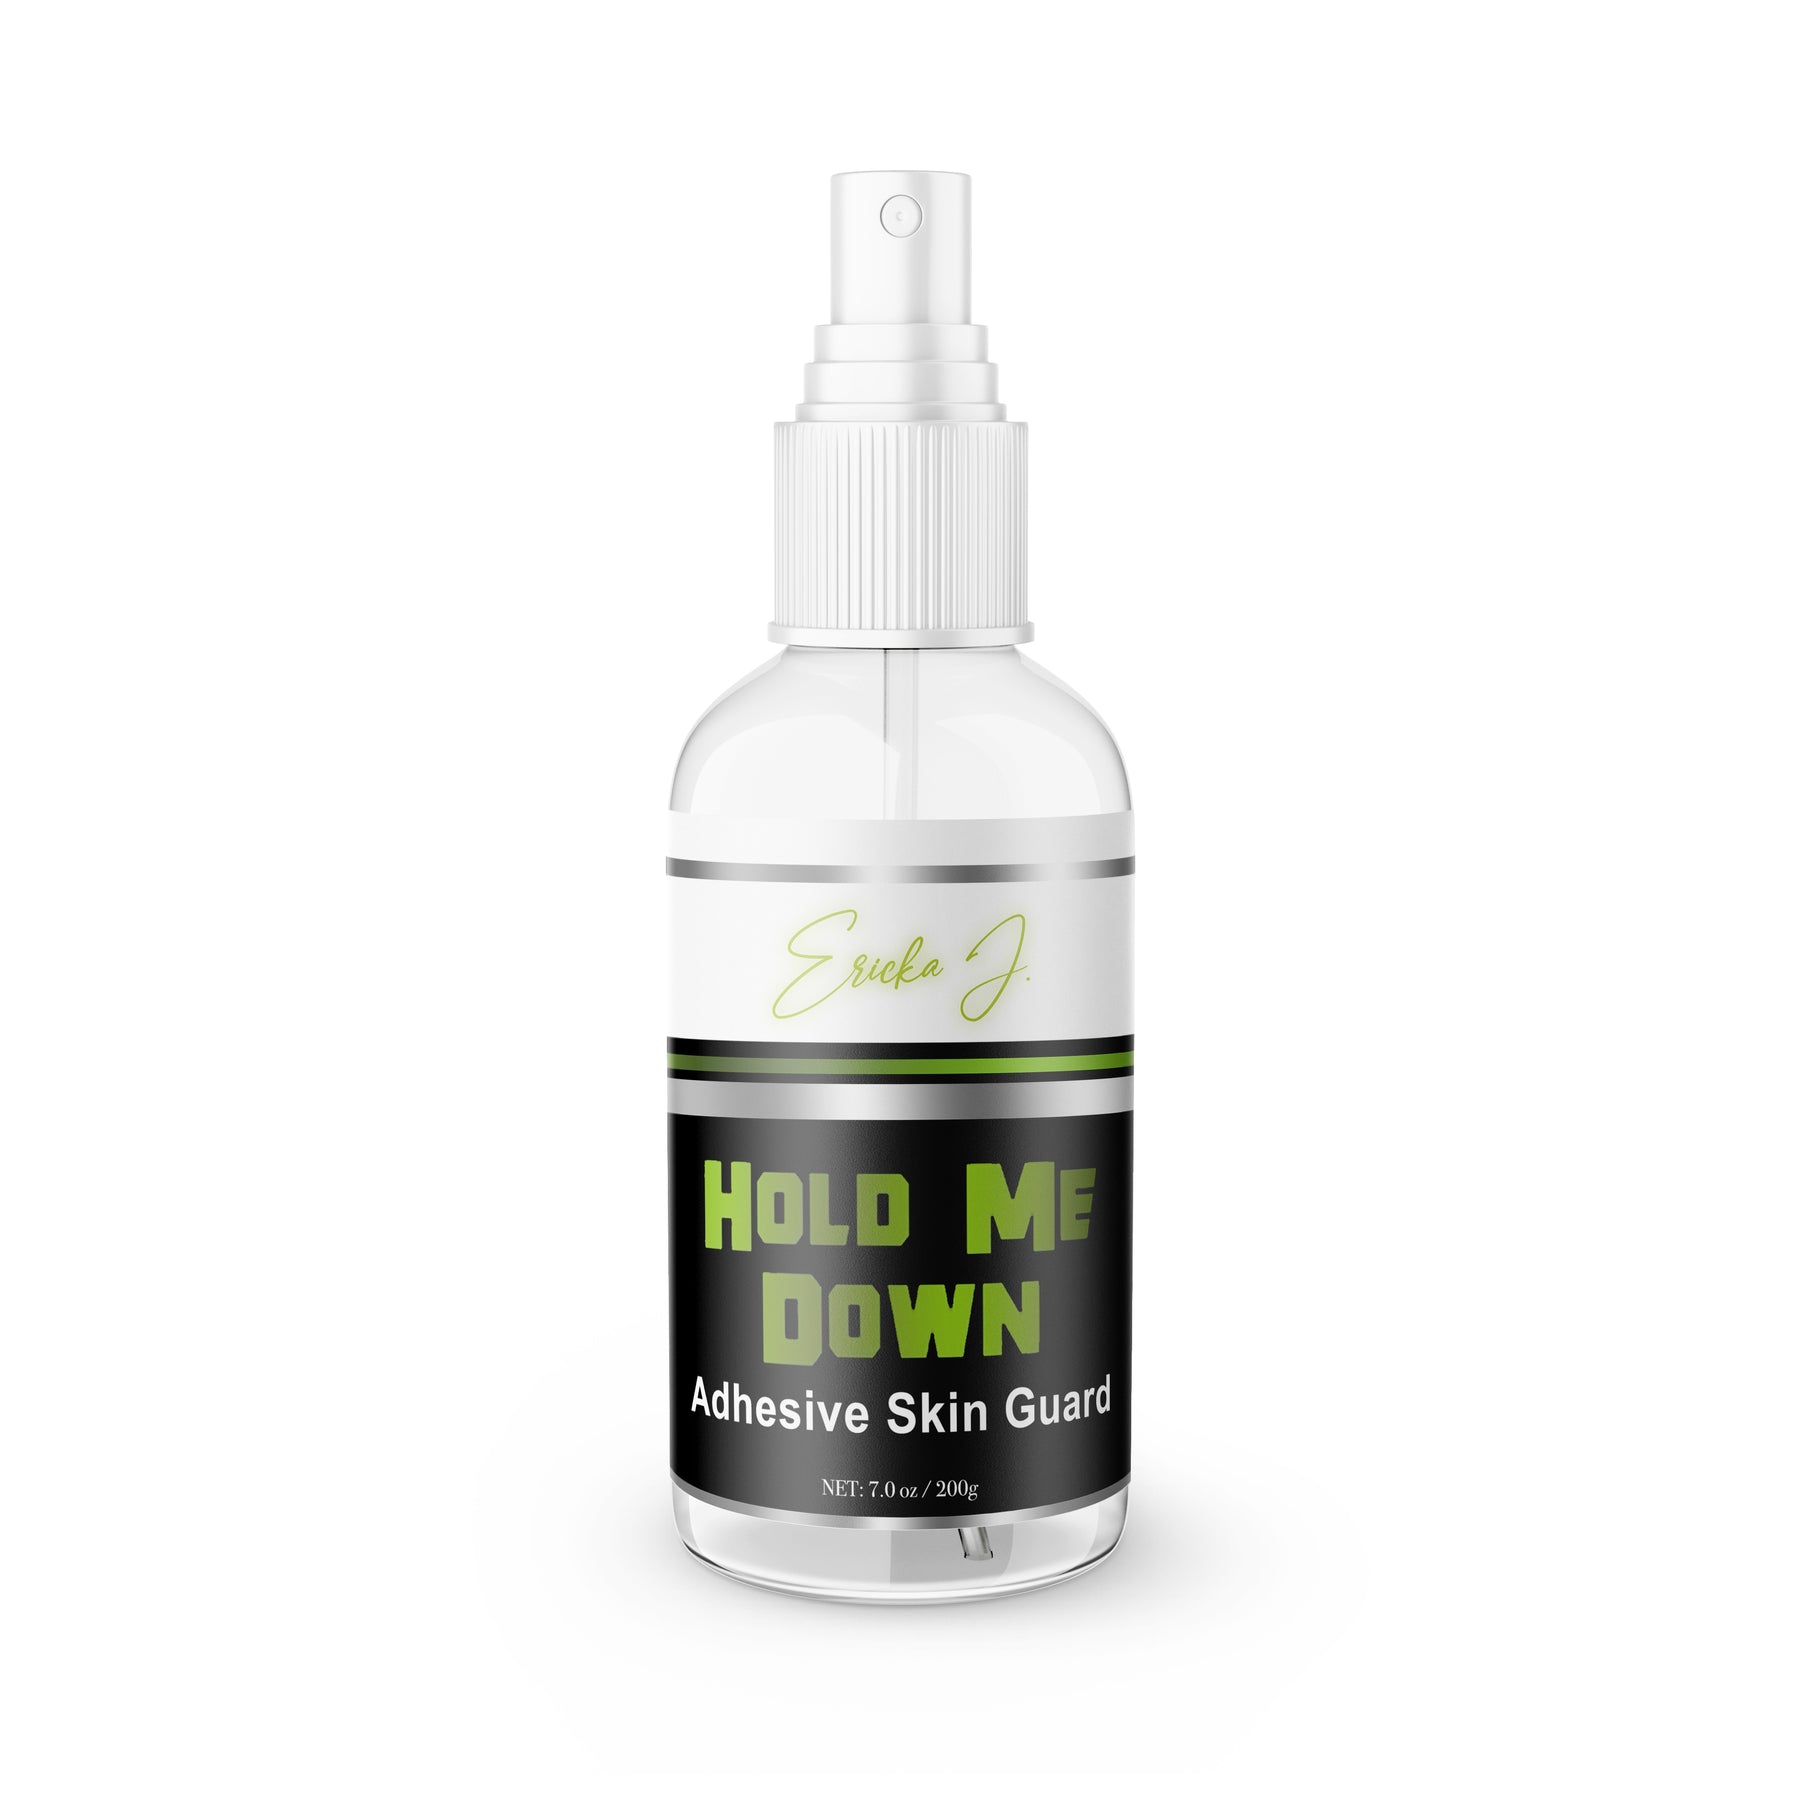 All Natural Hair Care Products: Hold Me Down ™ Adhesive (Small) – Ericka J.